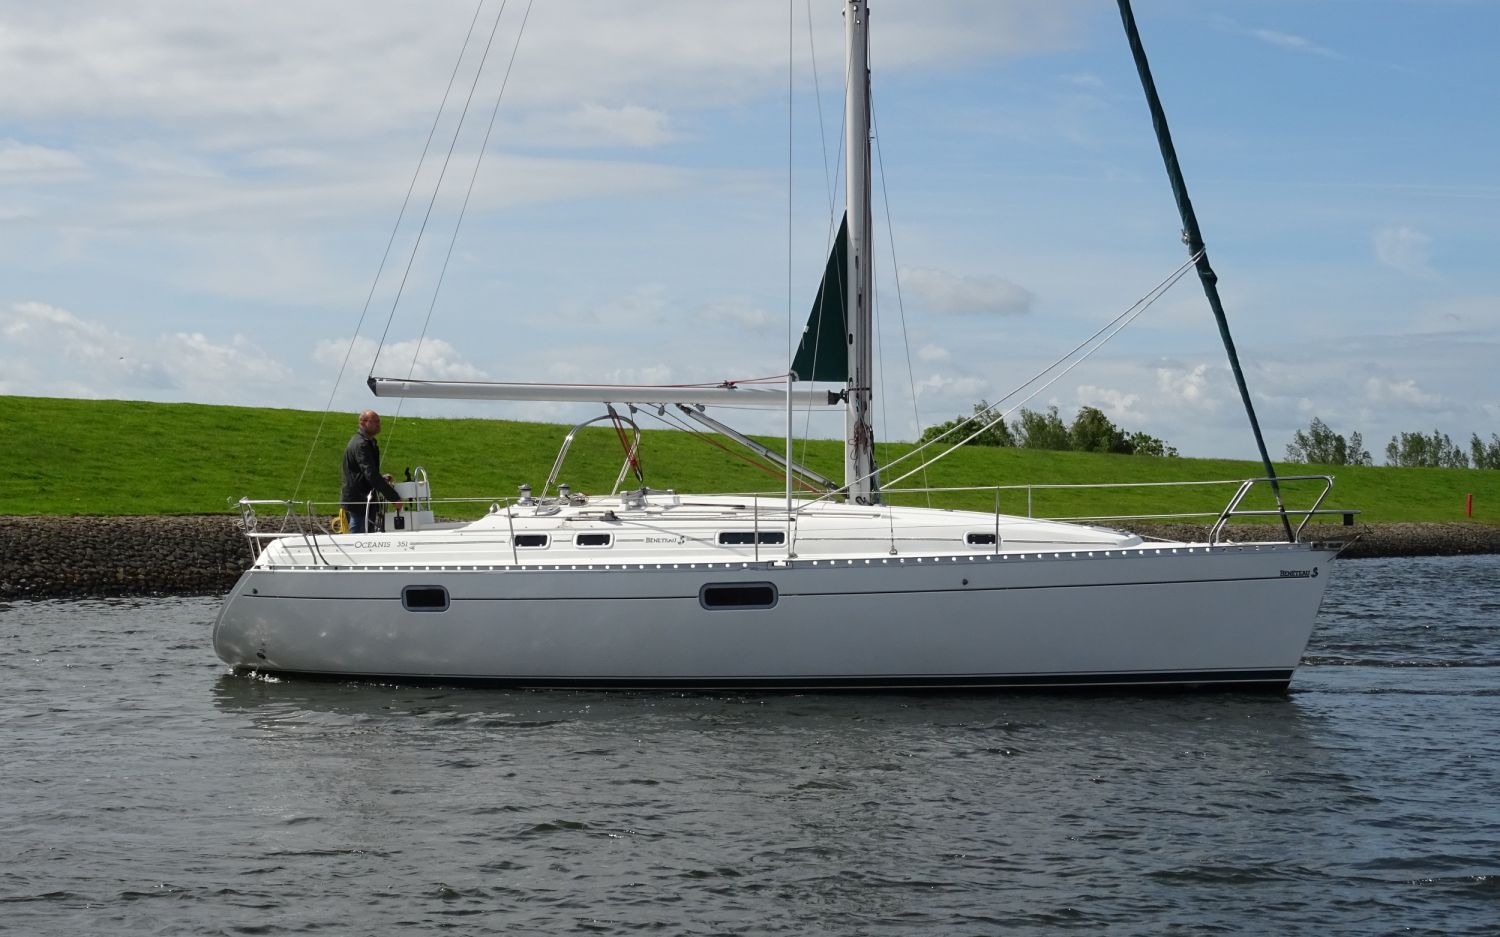 Beneteau Oceanis 351, Zeiljacht for sale by HollandBoat International Yachtbrokers